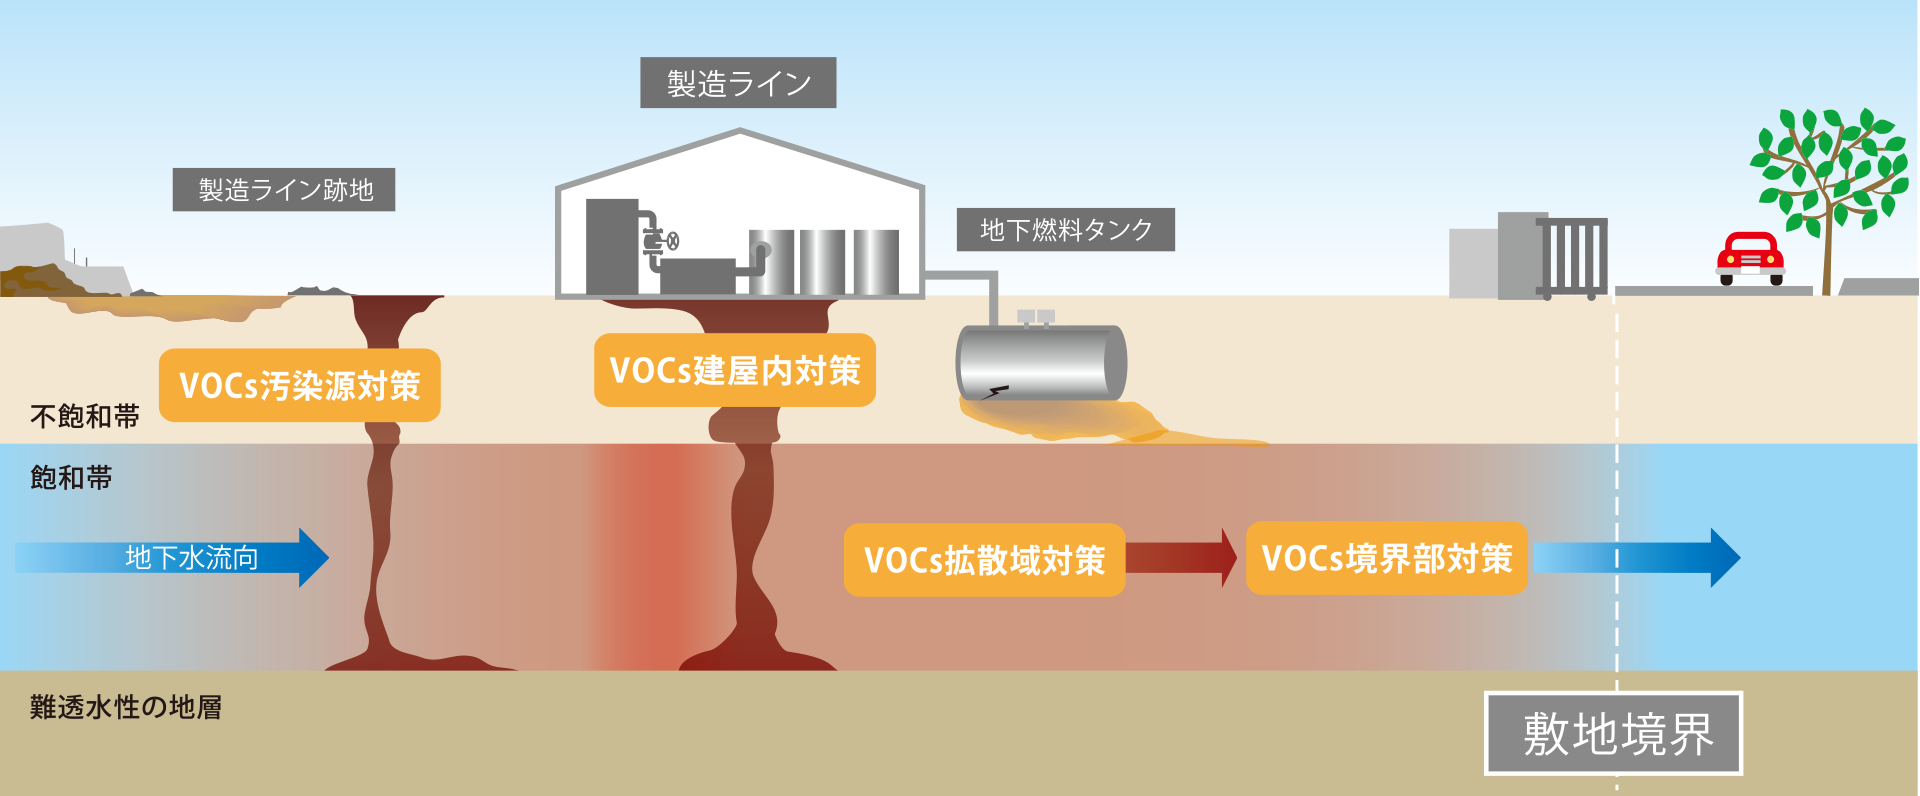 VOC汚染対策